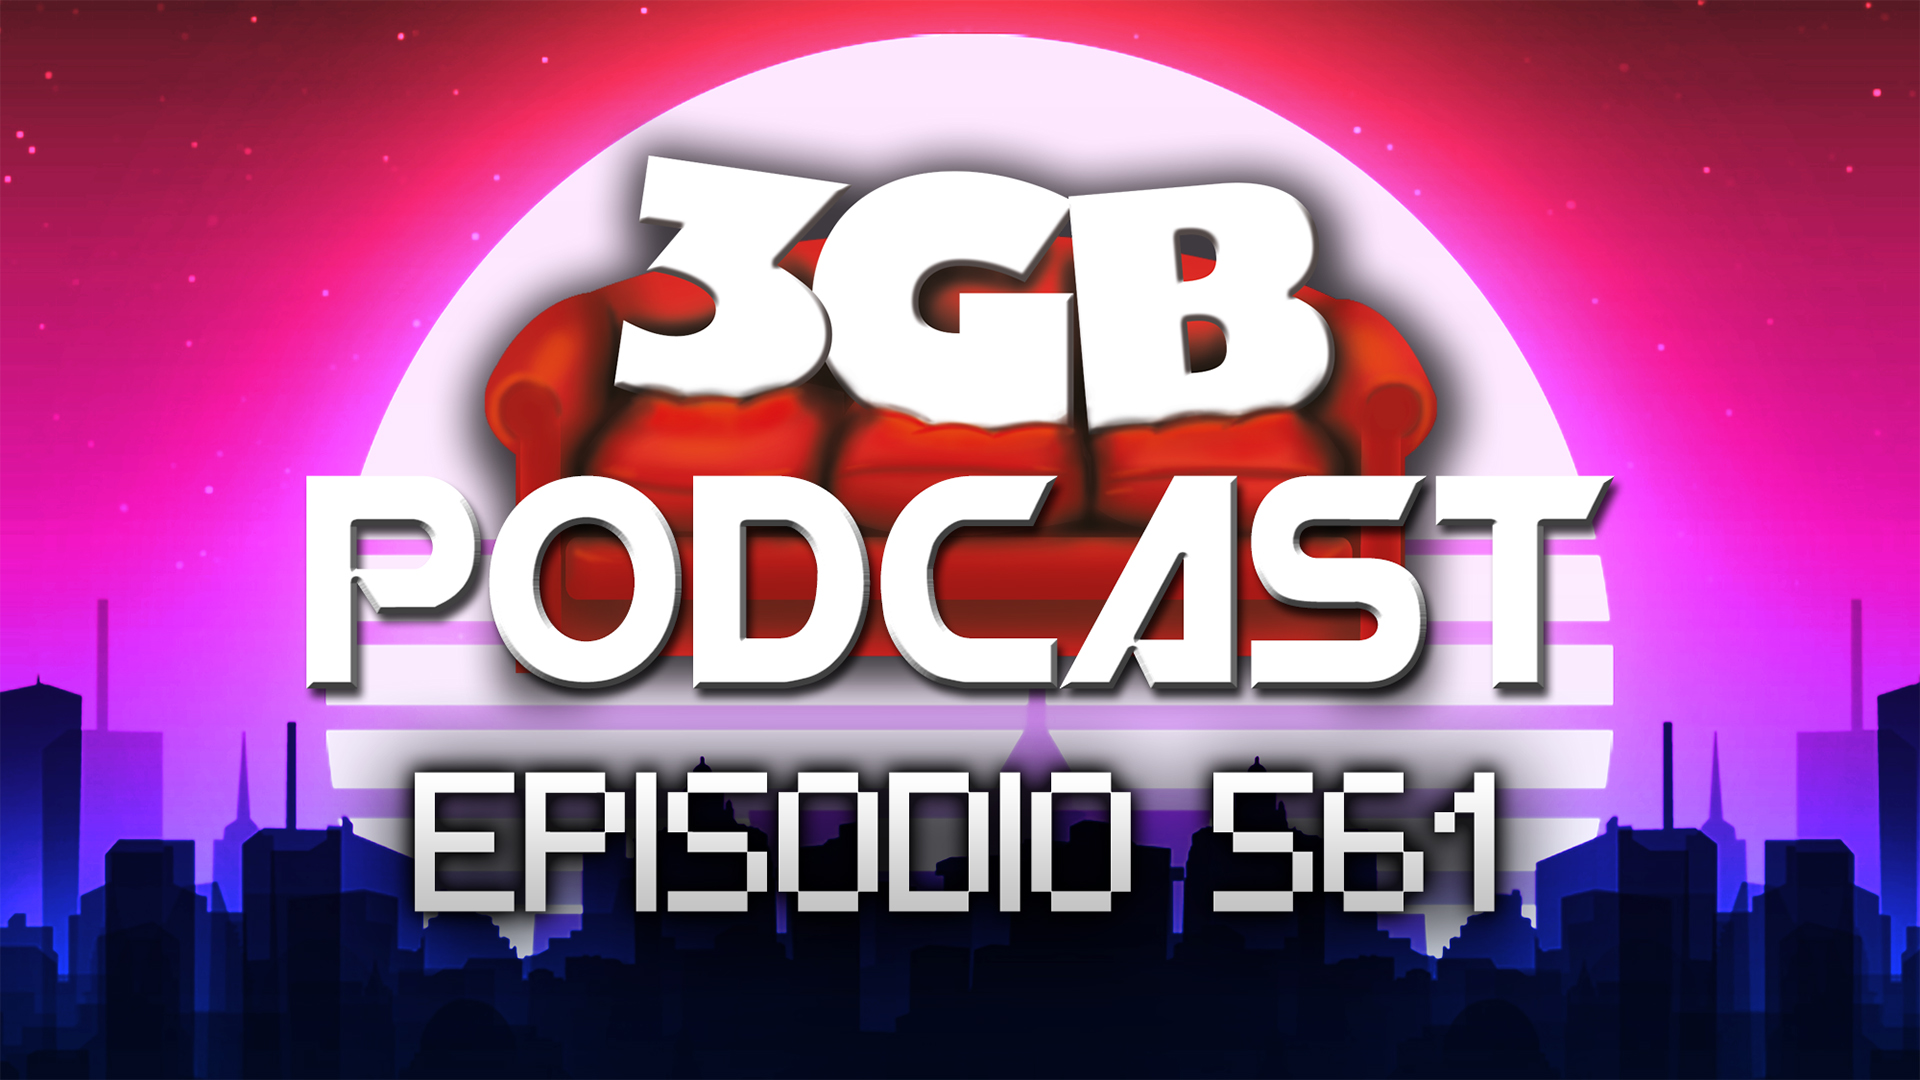 Podcast: Episodio 561, Semana de Marzo que parece de Noviembre